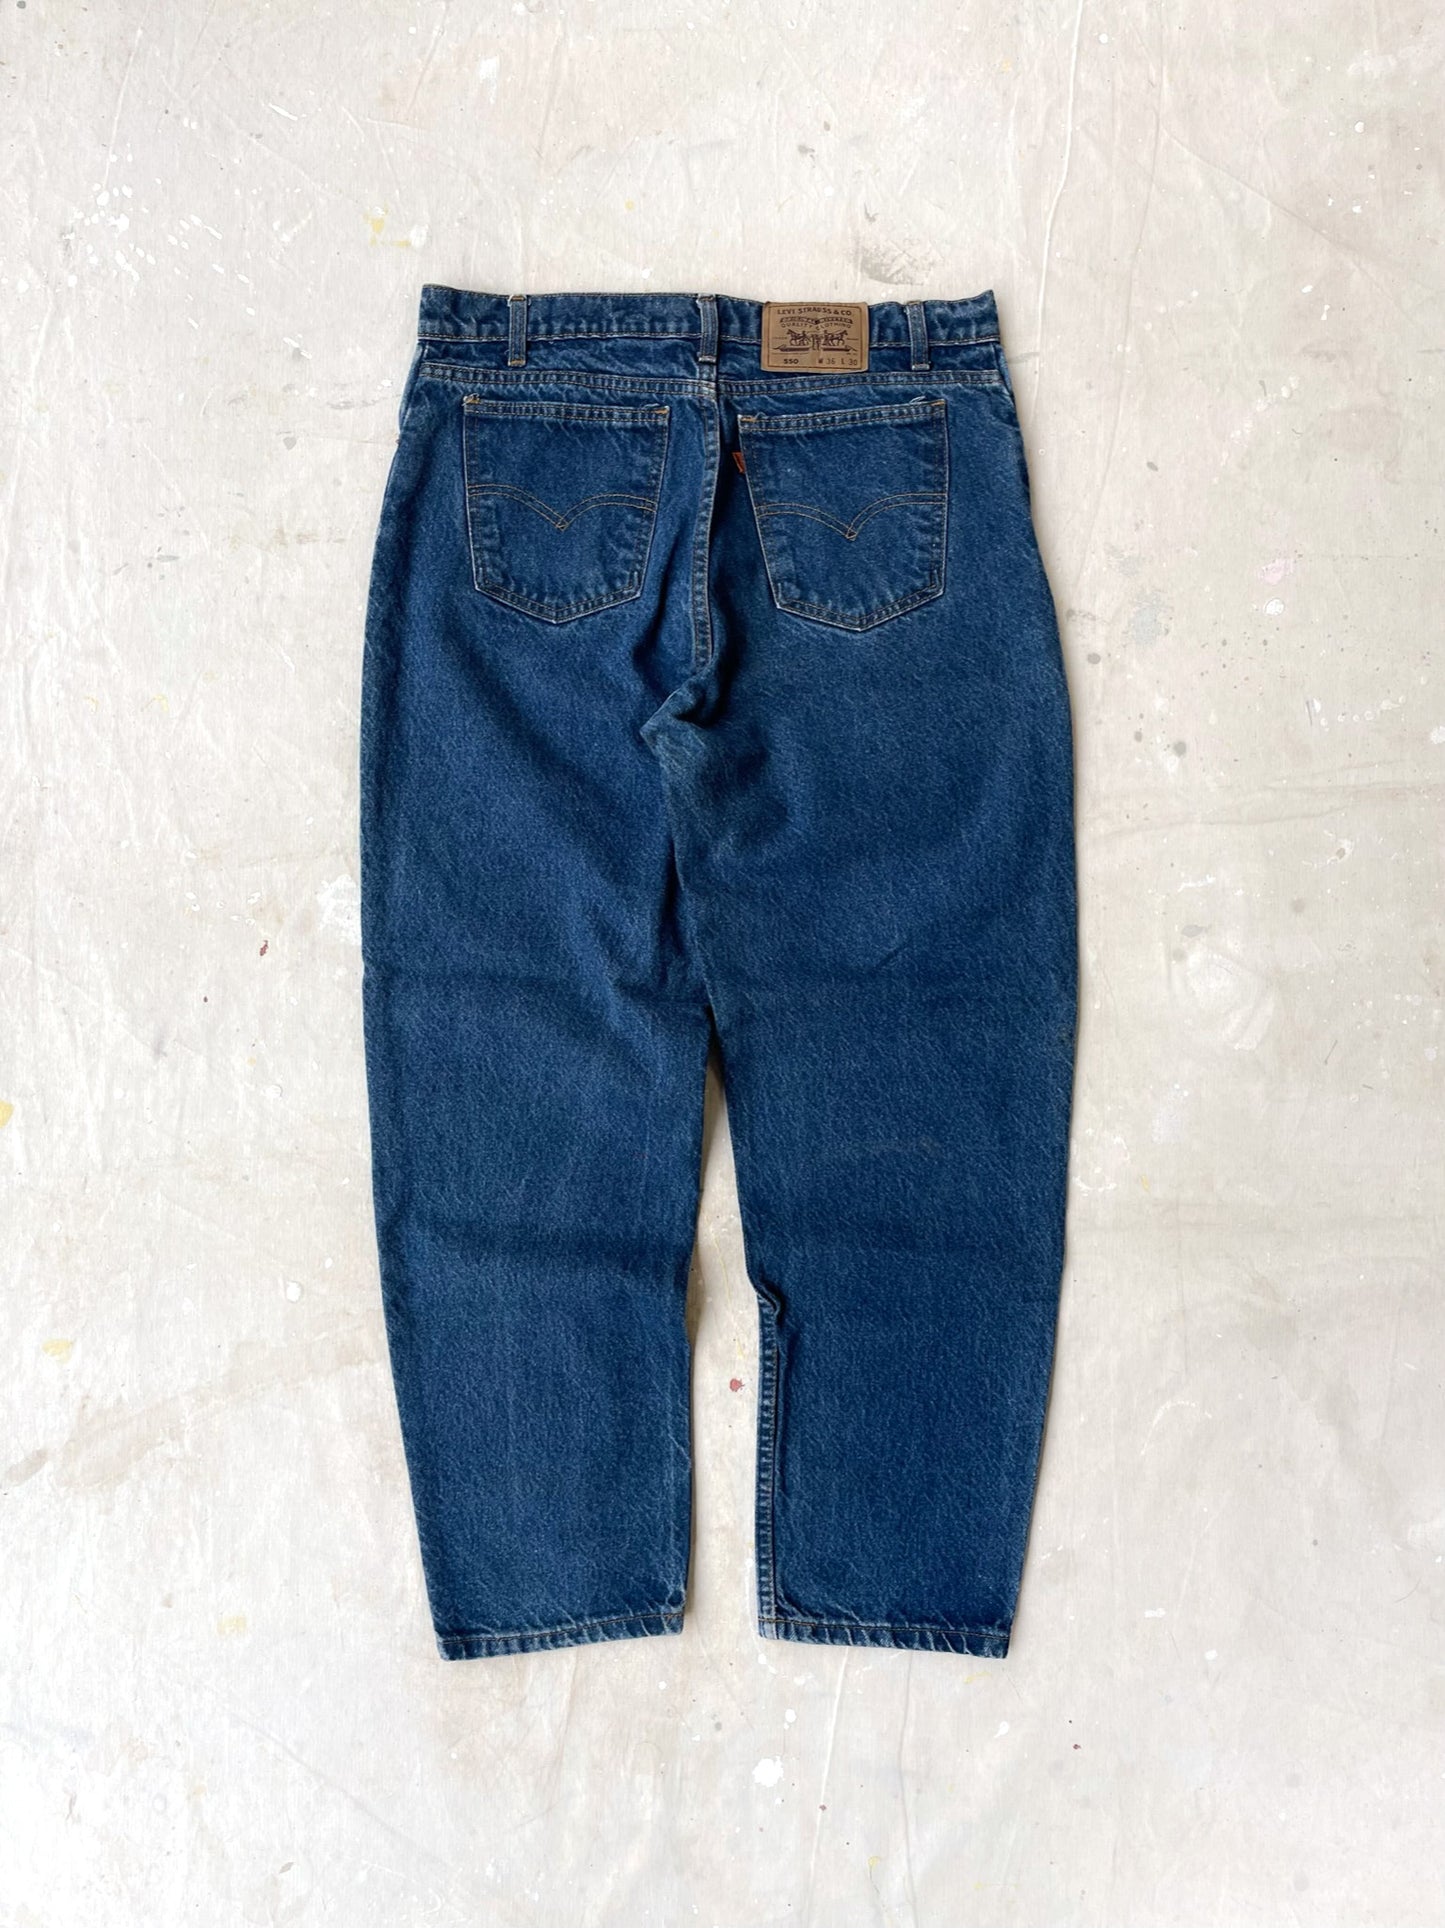 Levi's 550 Orange Tab Jeans—[34X30]